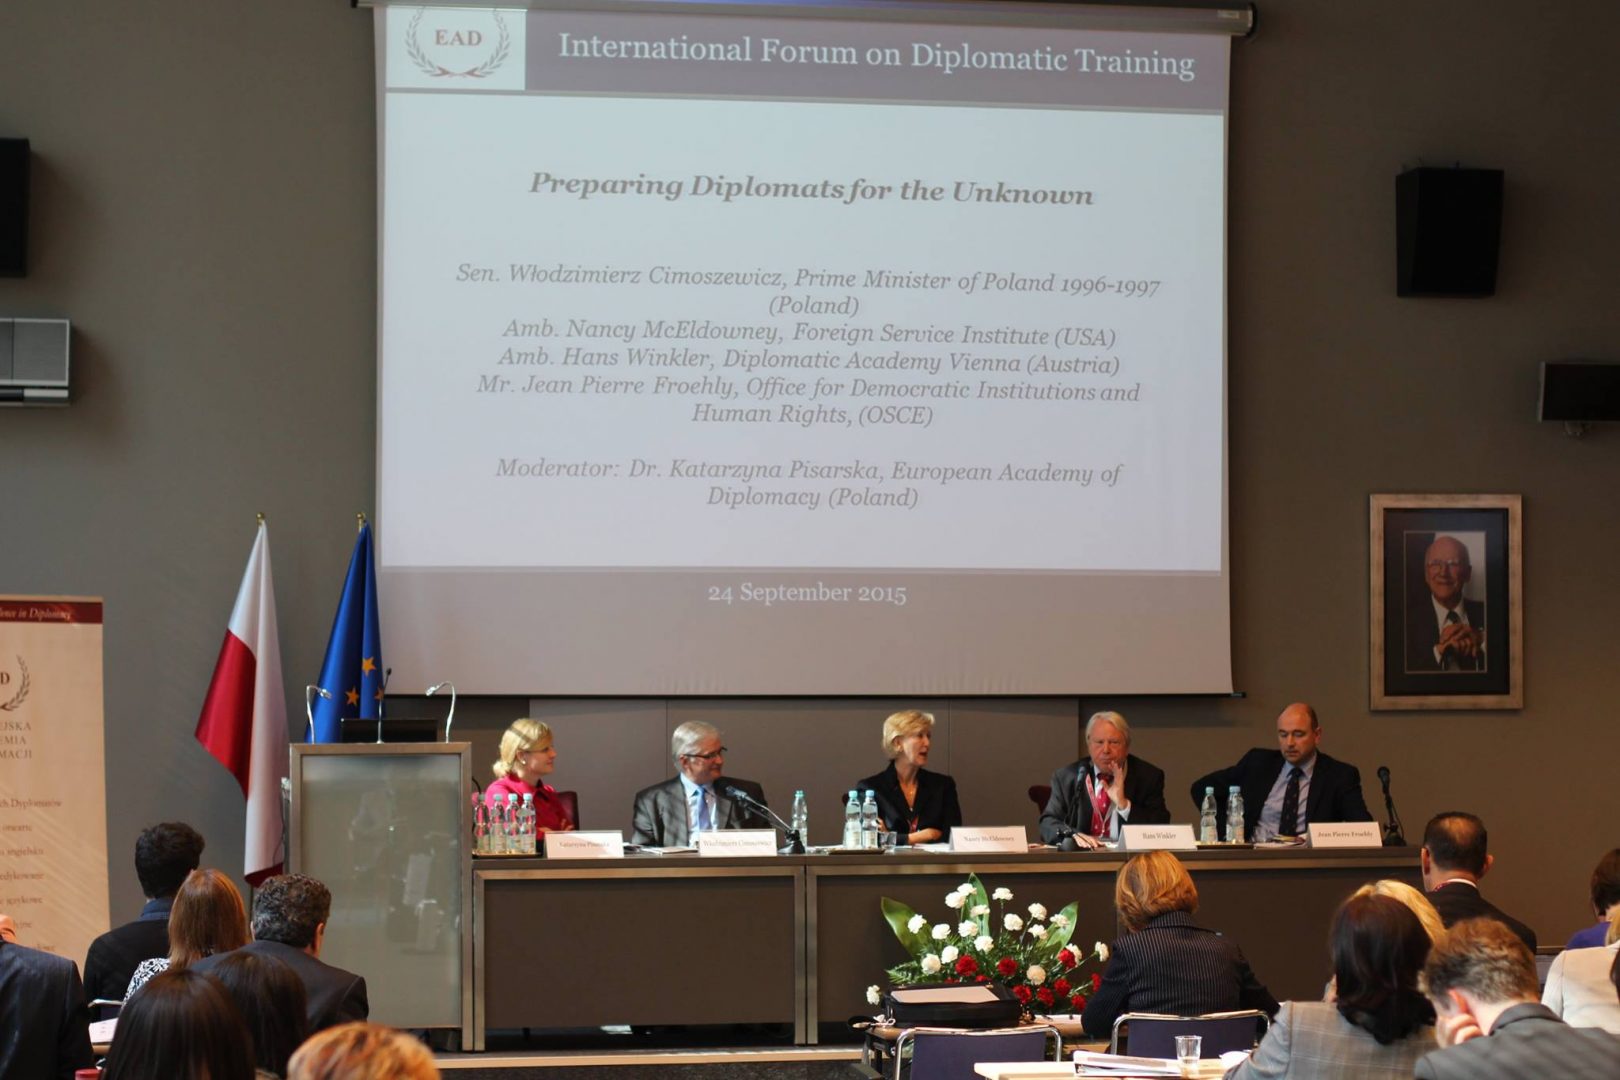 The International Forum on Diplomatic Training